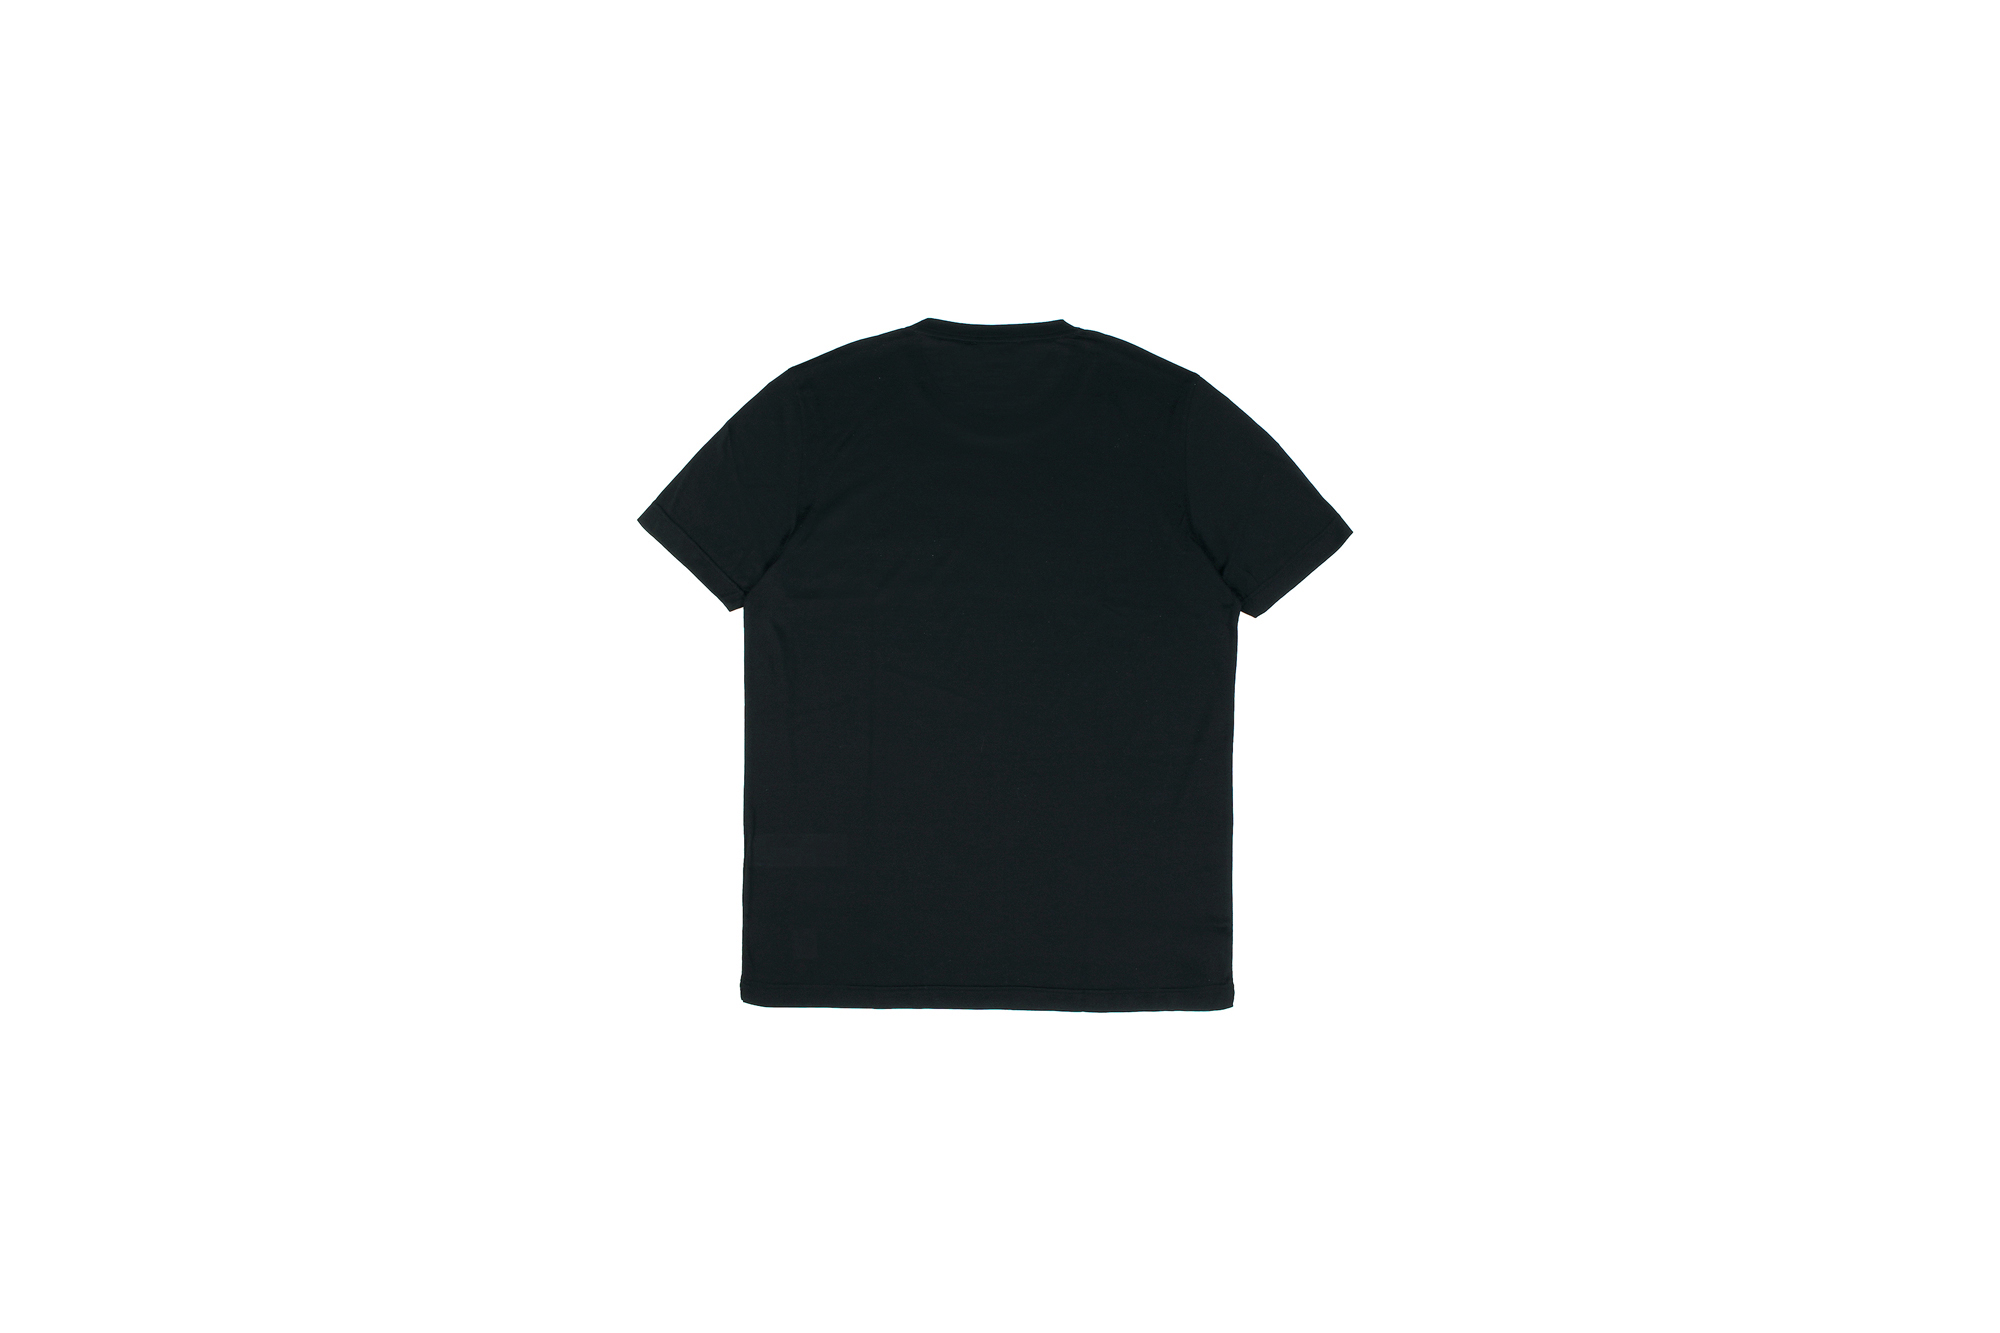 Gran Sasso (グランサッソ) Silk T-shirt (シルク Tシャツ) SETA (シルク 100%) ショートスリーブ シルク Tシャツ BLACK (ブラック・303) made in italy (イタリア製) 2020 春夏新作 愛知 名古屋 altoediritto アルトエデリット